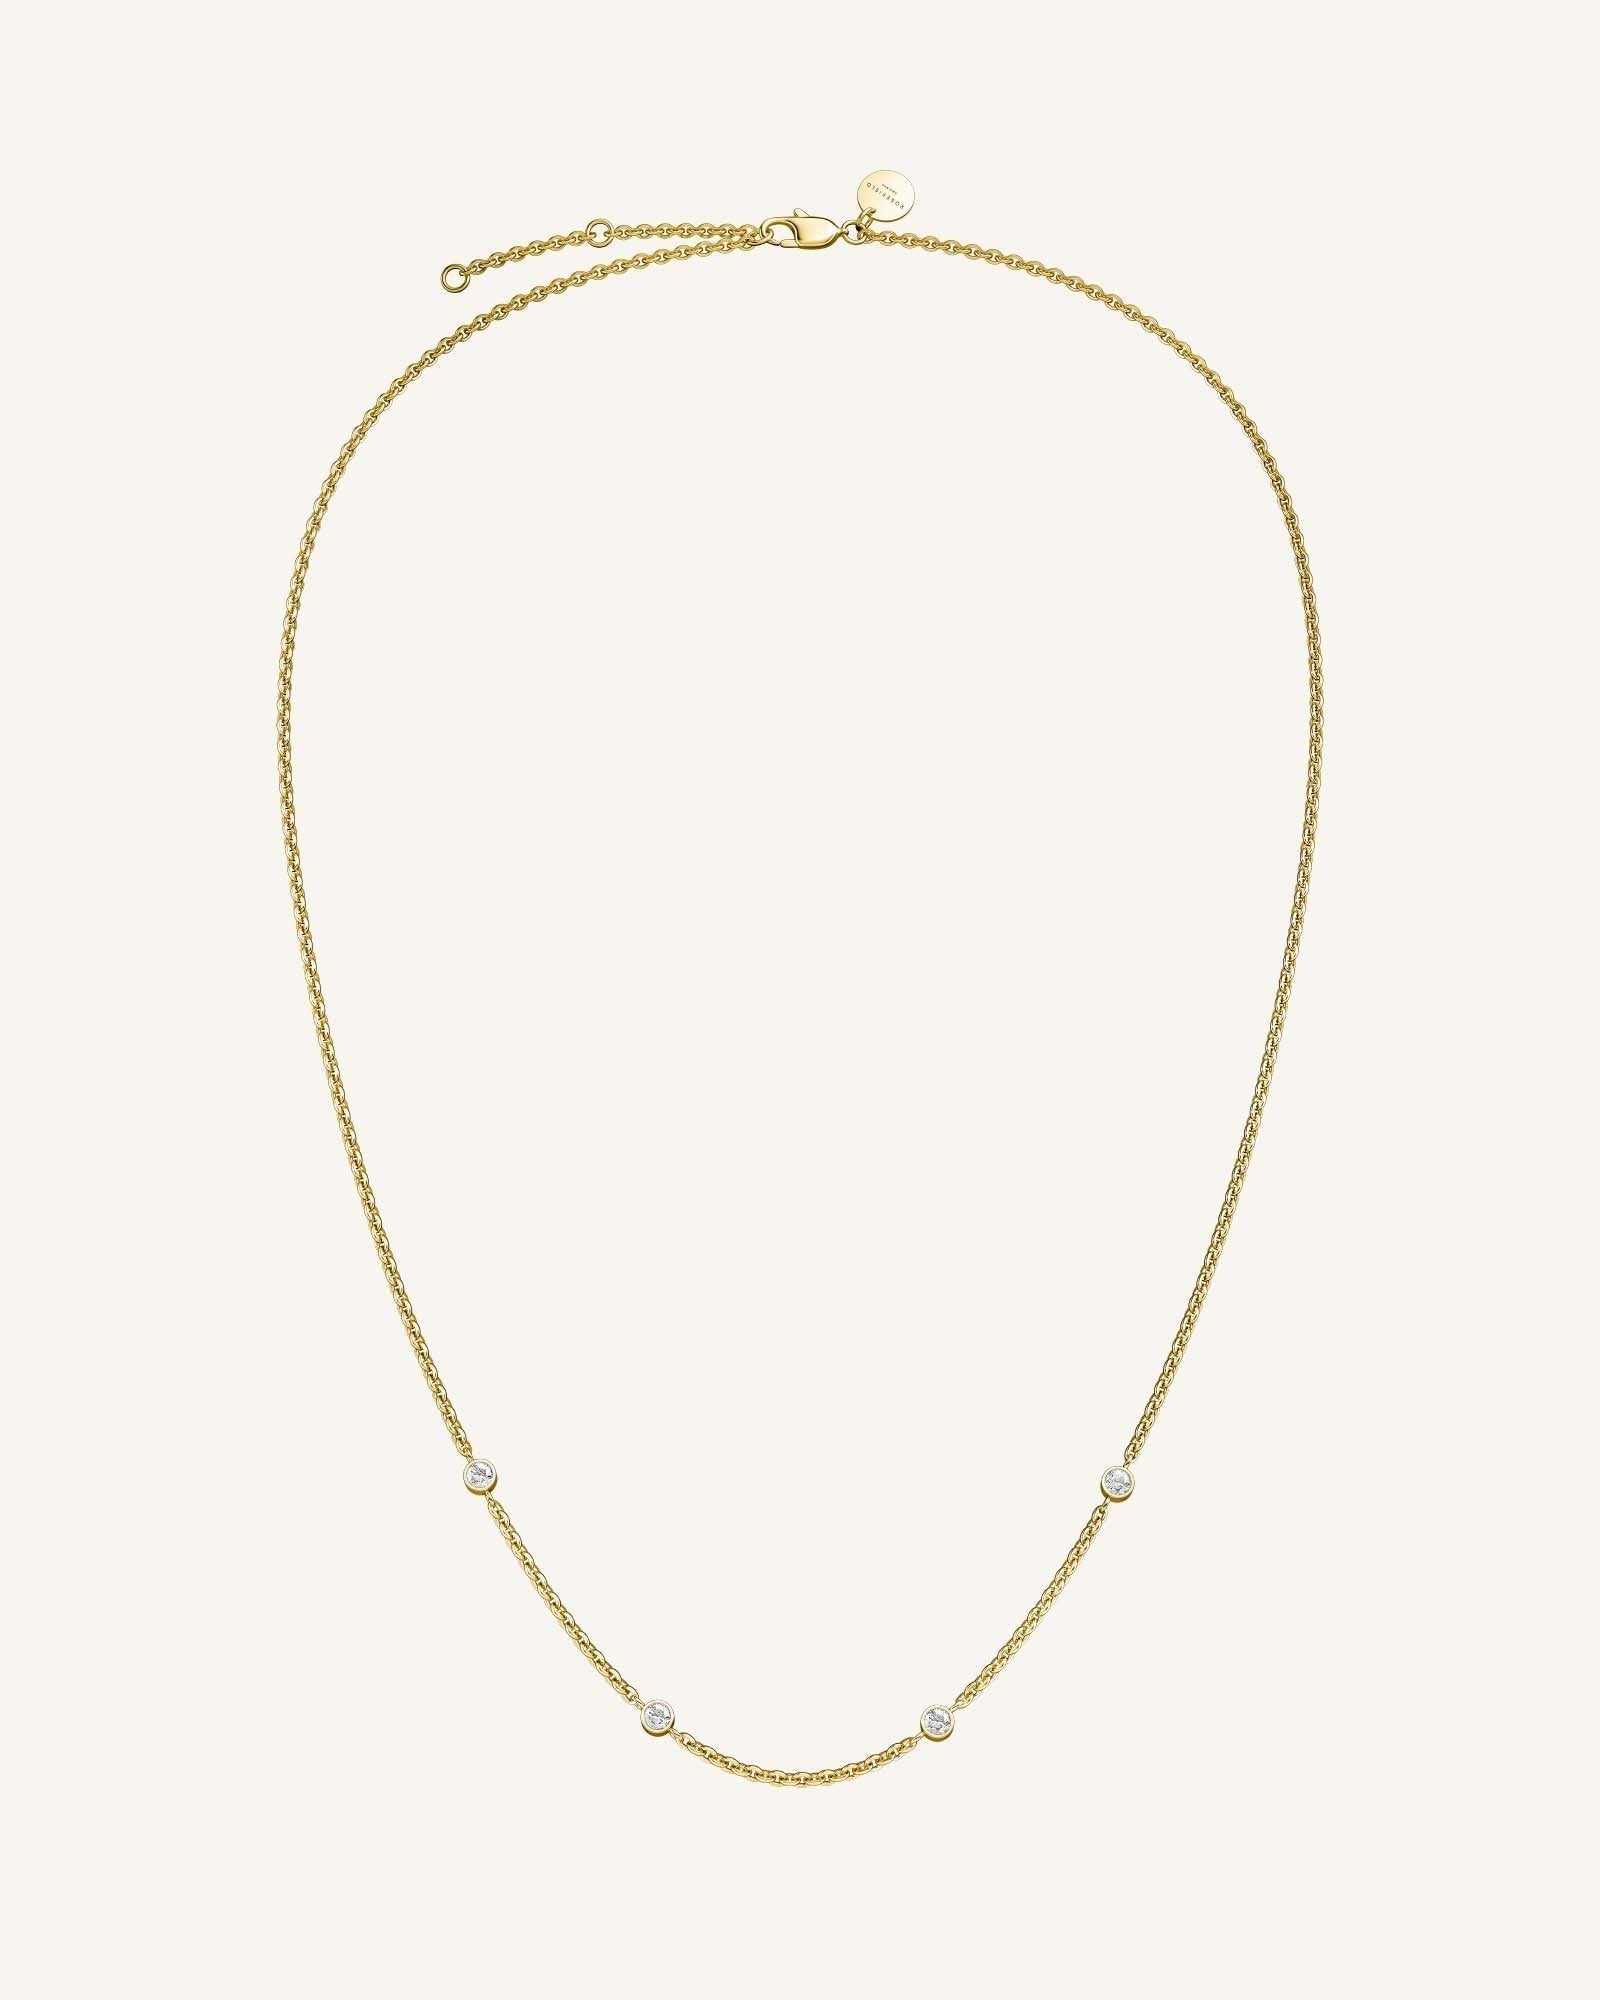 wholesale birthstone necklace gold wire wrap| Alibaba.com